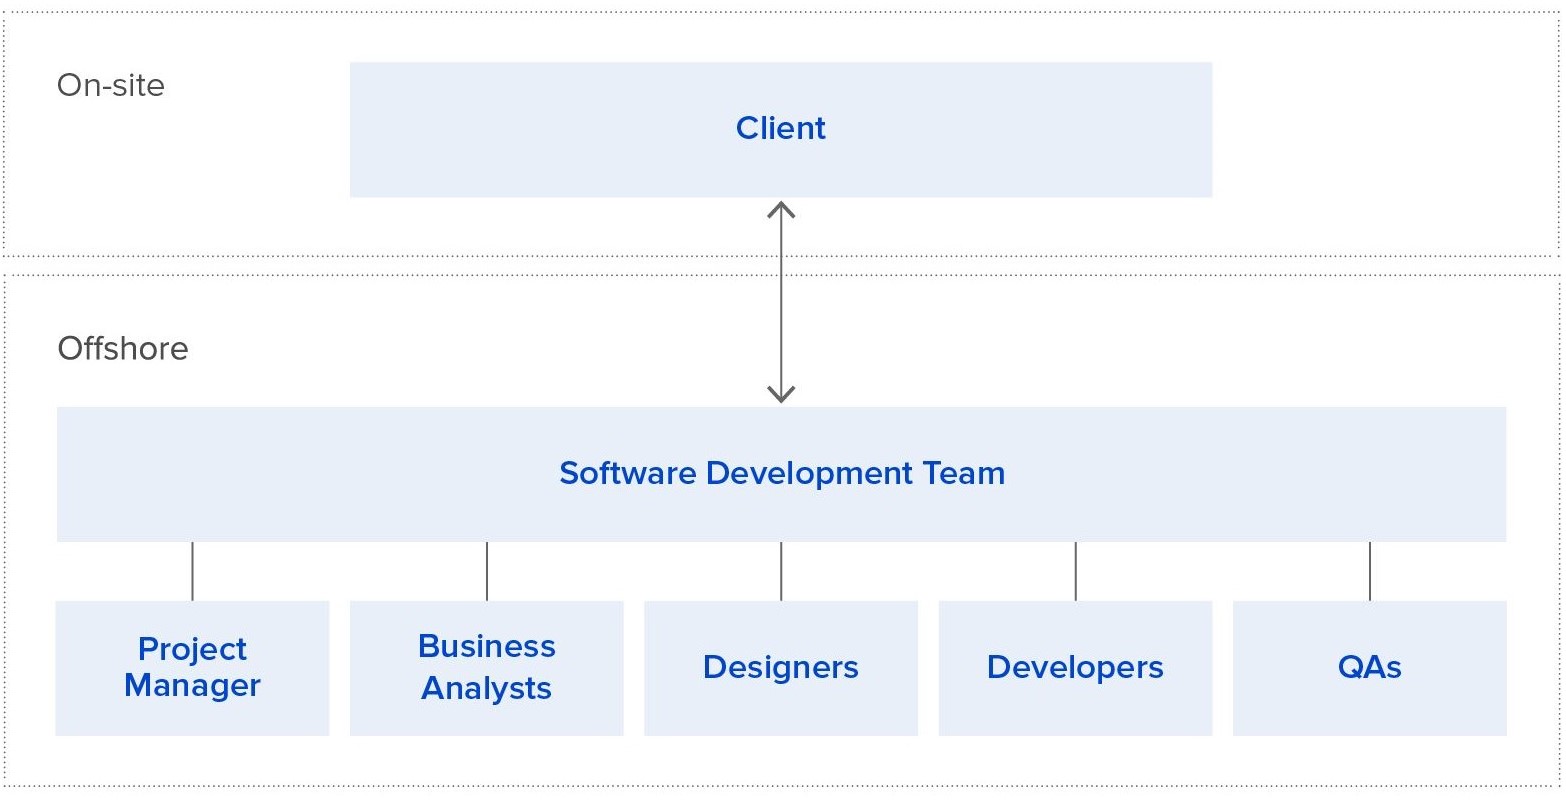 software development team structure